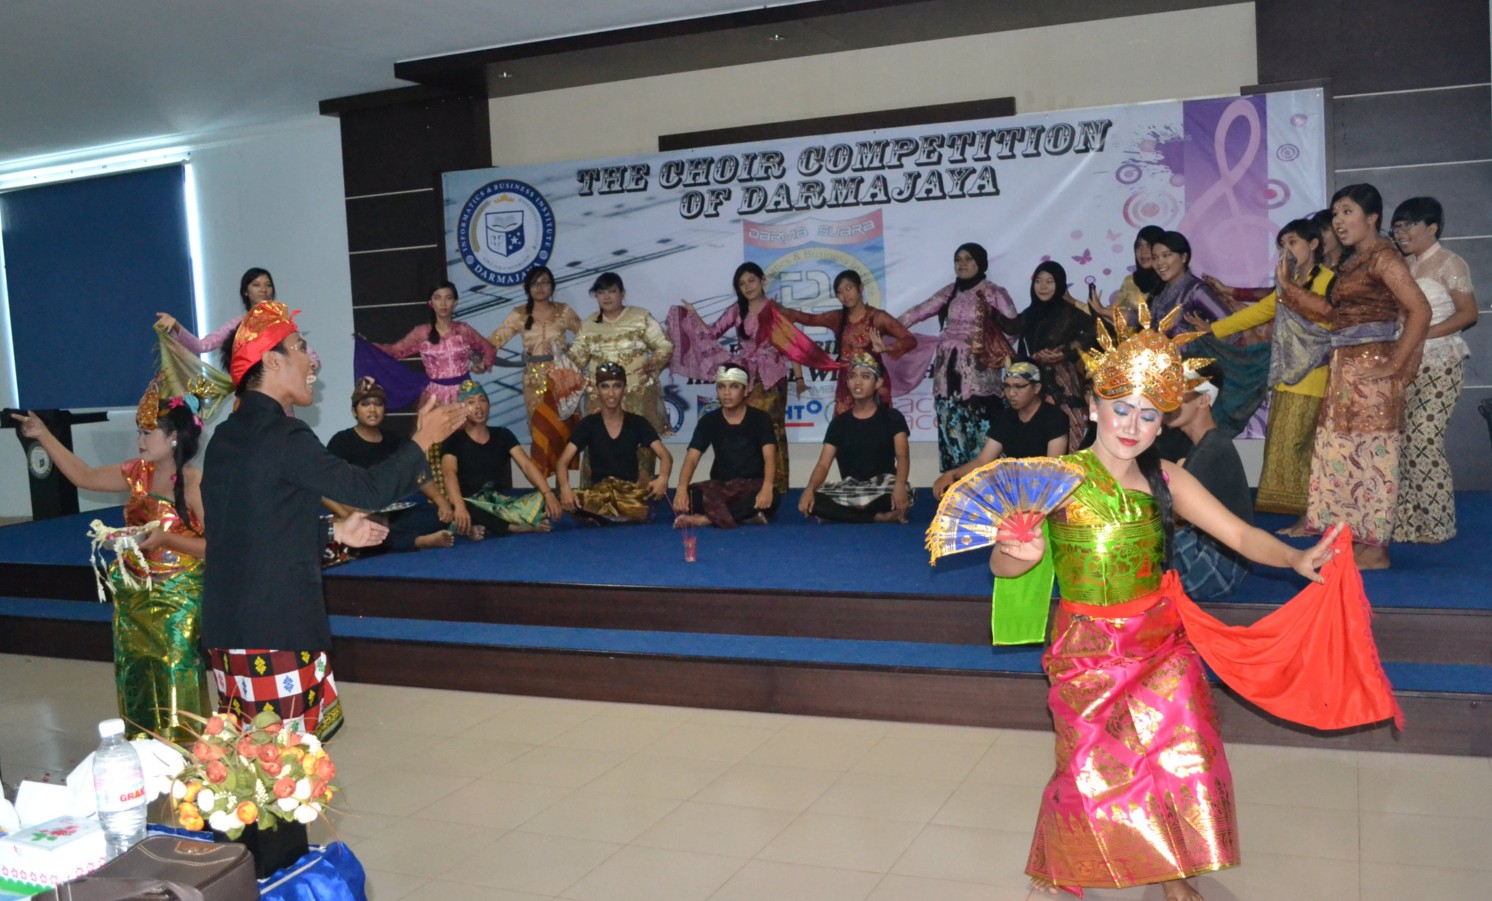 The Choir Competition of Darmajaya Berlangsung Sukses